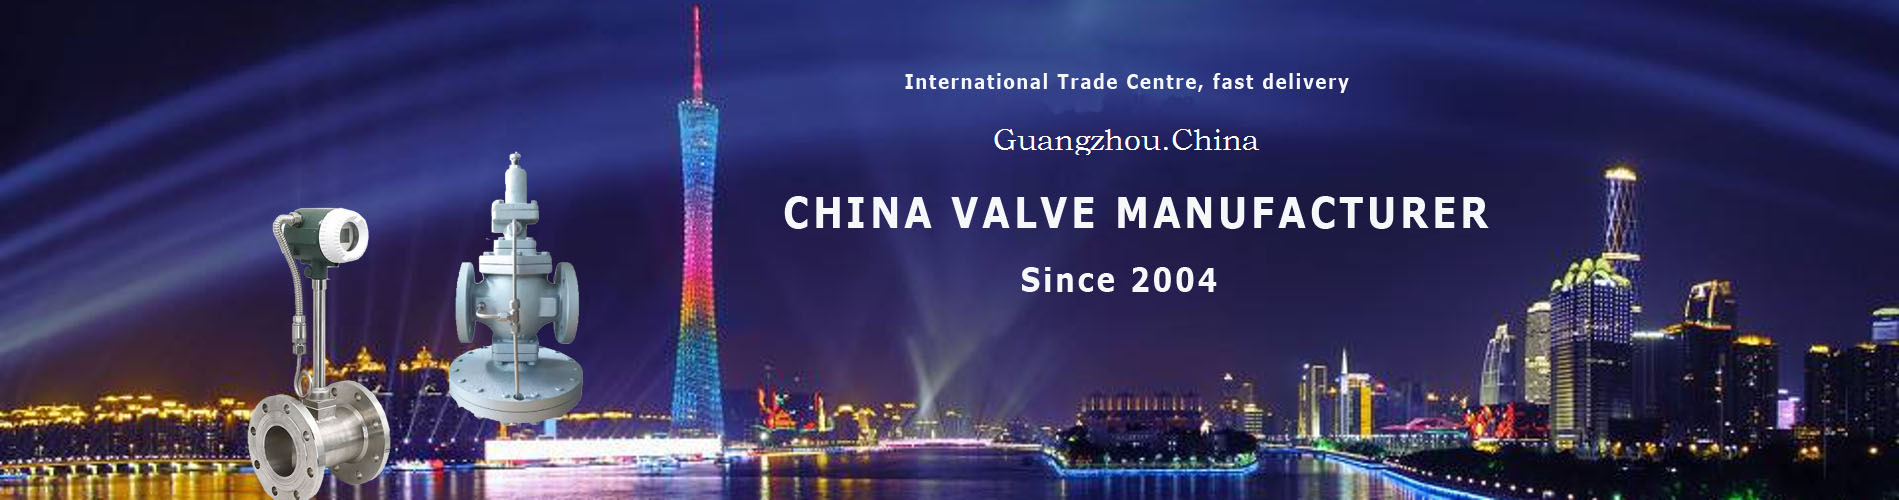 China valve manufacturer